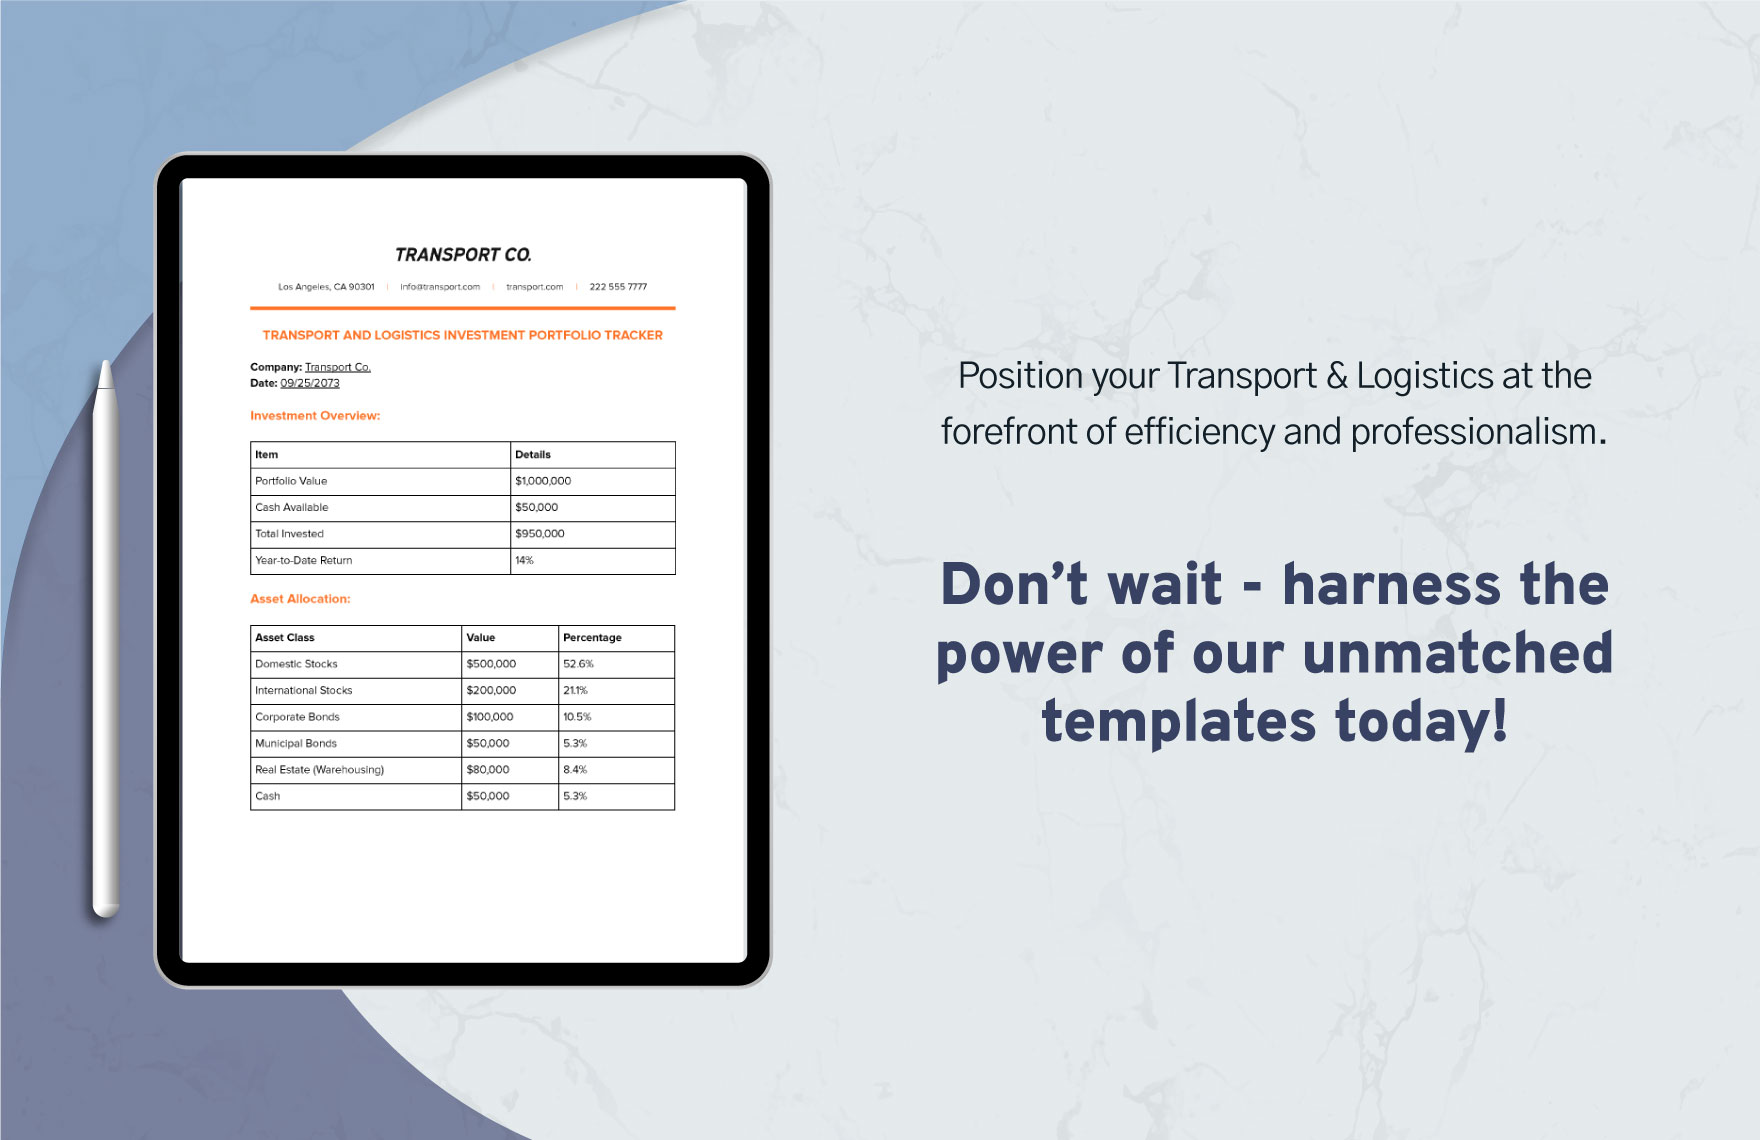 Transport and Logistics Investment Portfolio Tracker Template